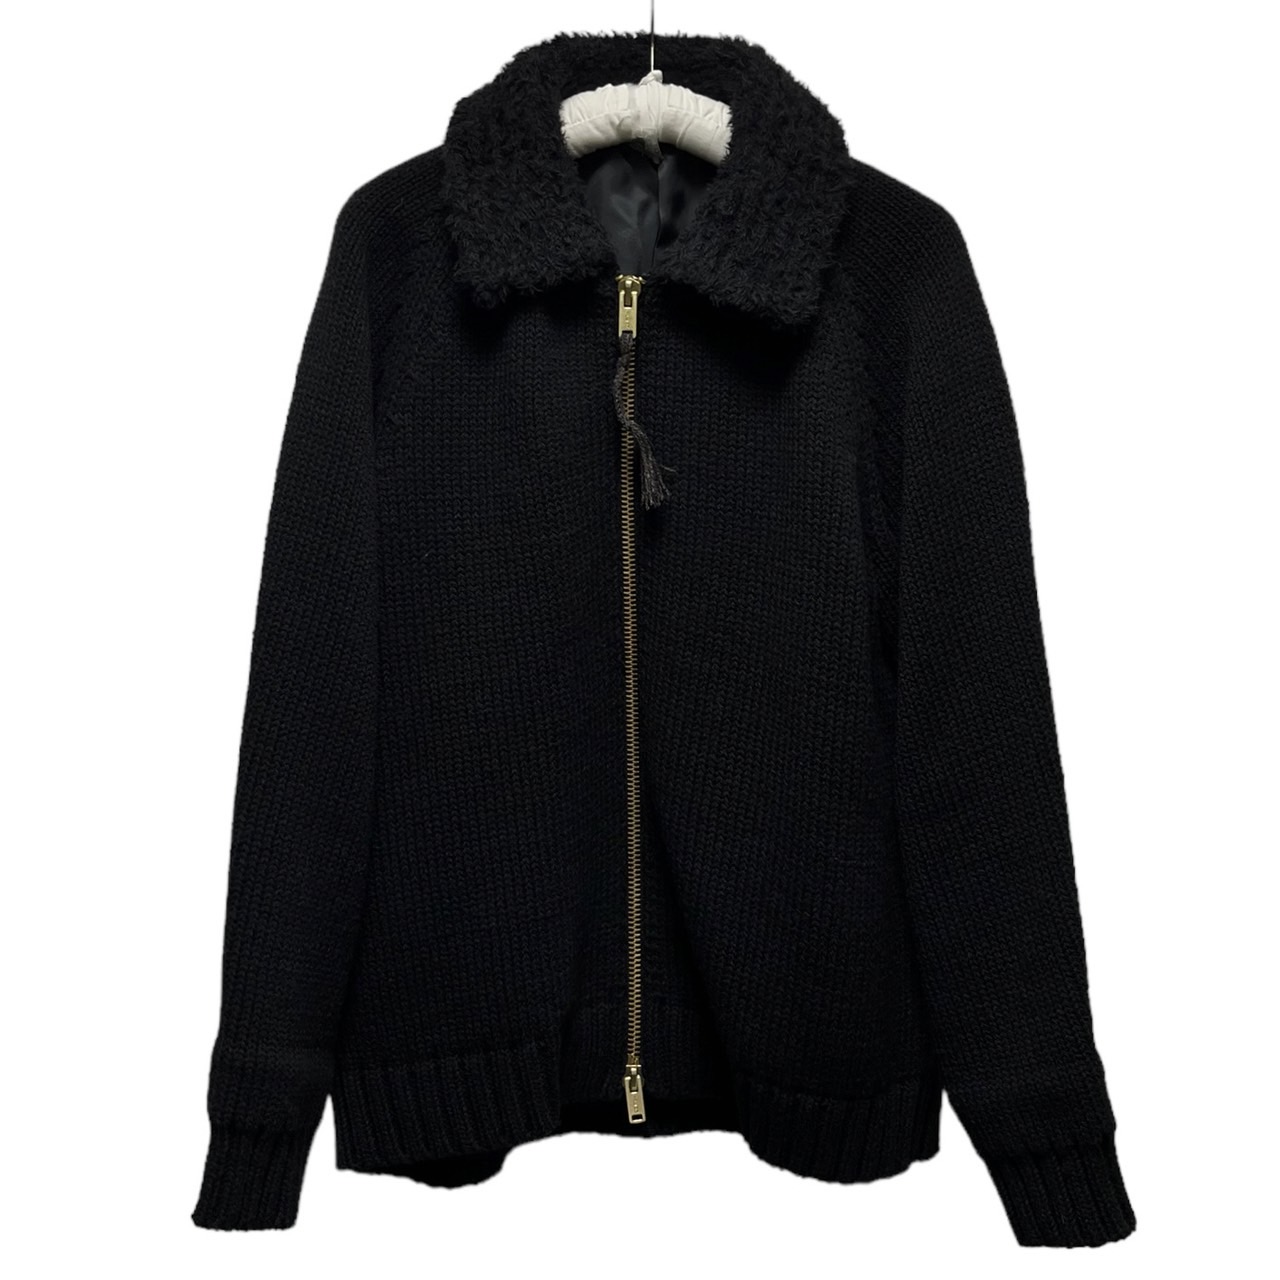 Nahyat Shetland wool knit jacket n-052 買取金額 20,800円